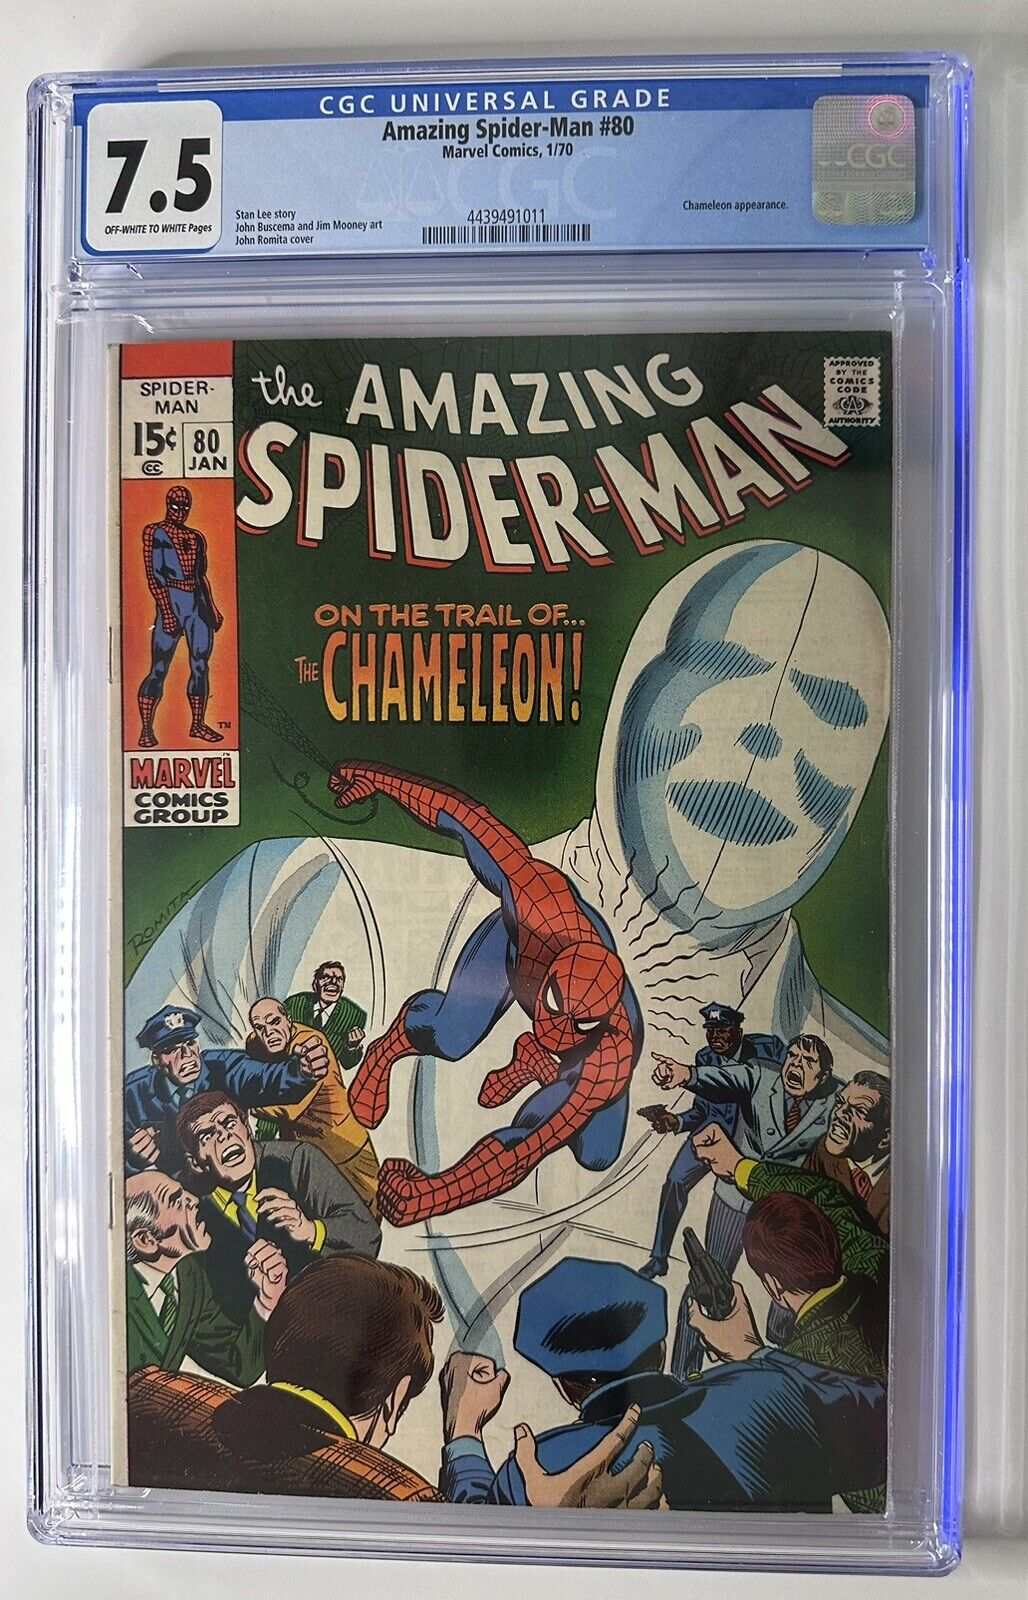 Amazing Spider-Man #80 Marvel Comics, 1/70 - CGC 7.5